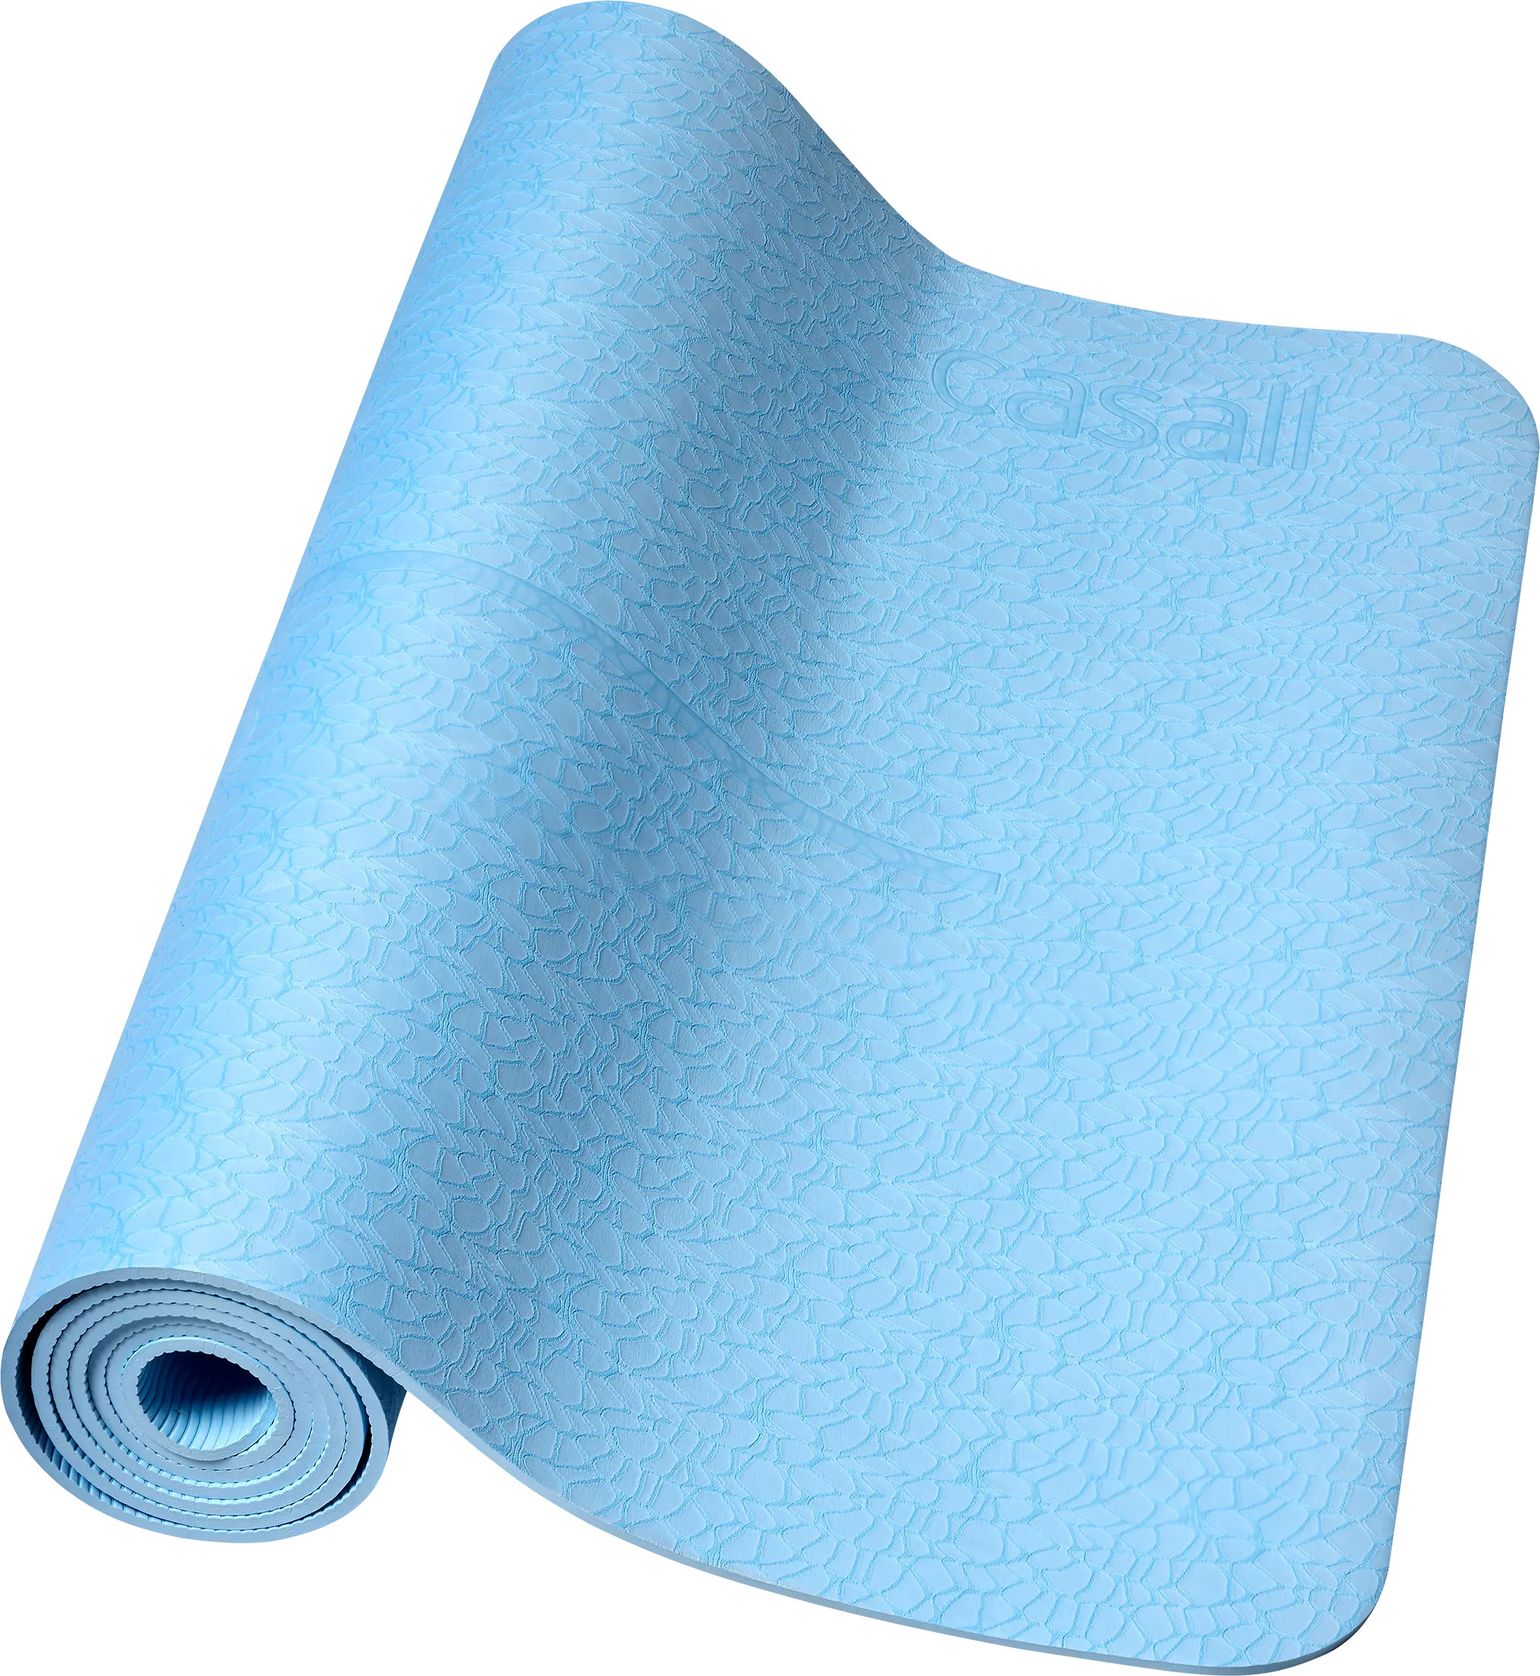 Exercise Mat Cushion 5mm PVC Free Sky Blue